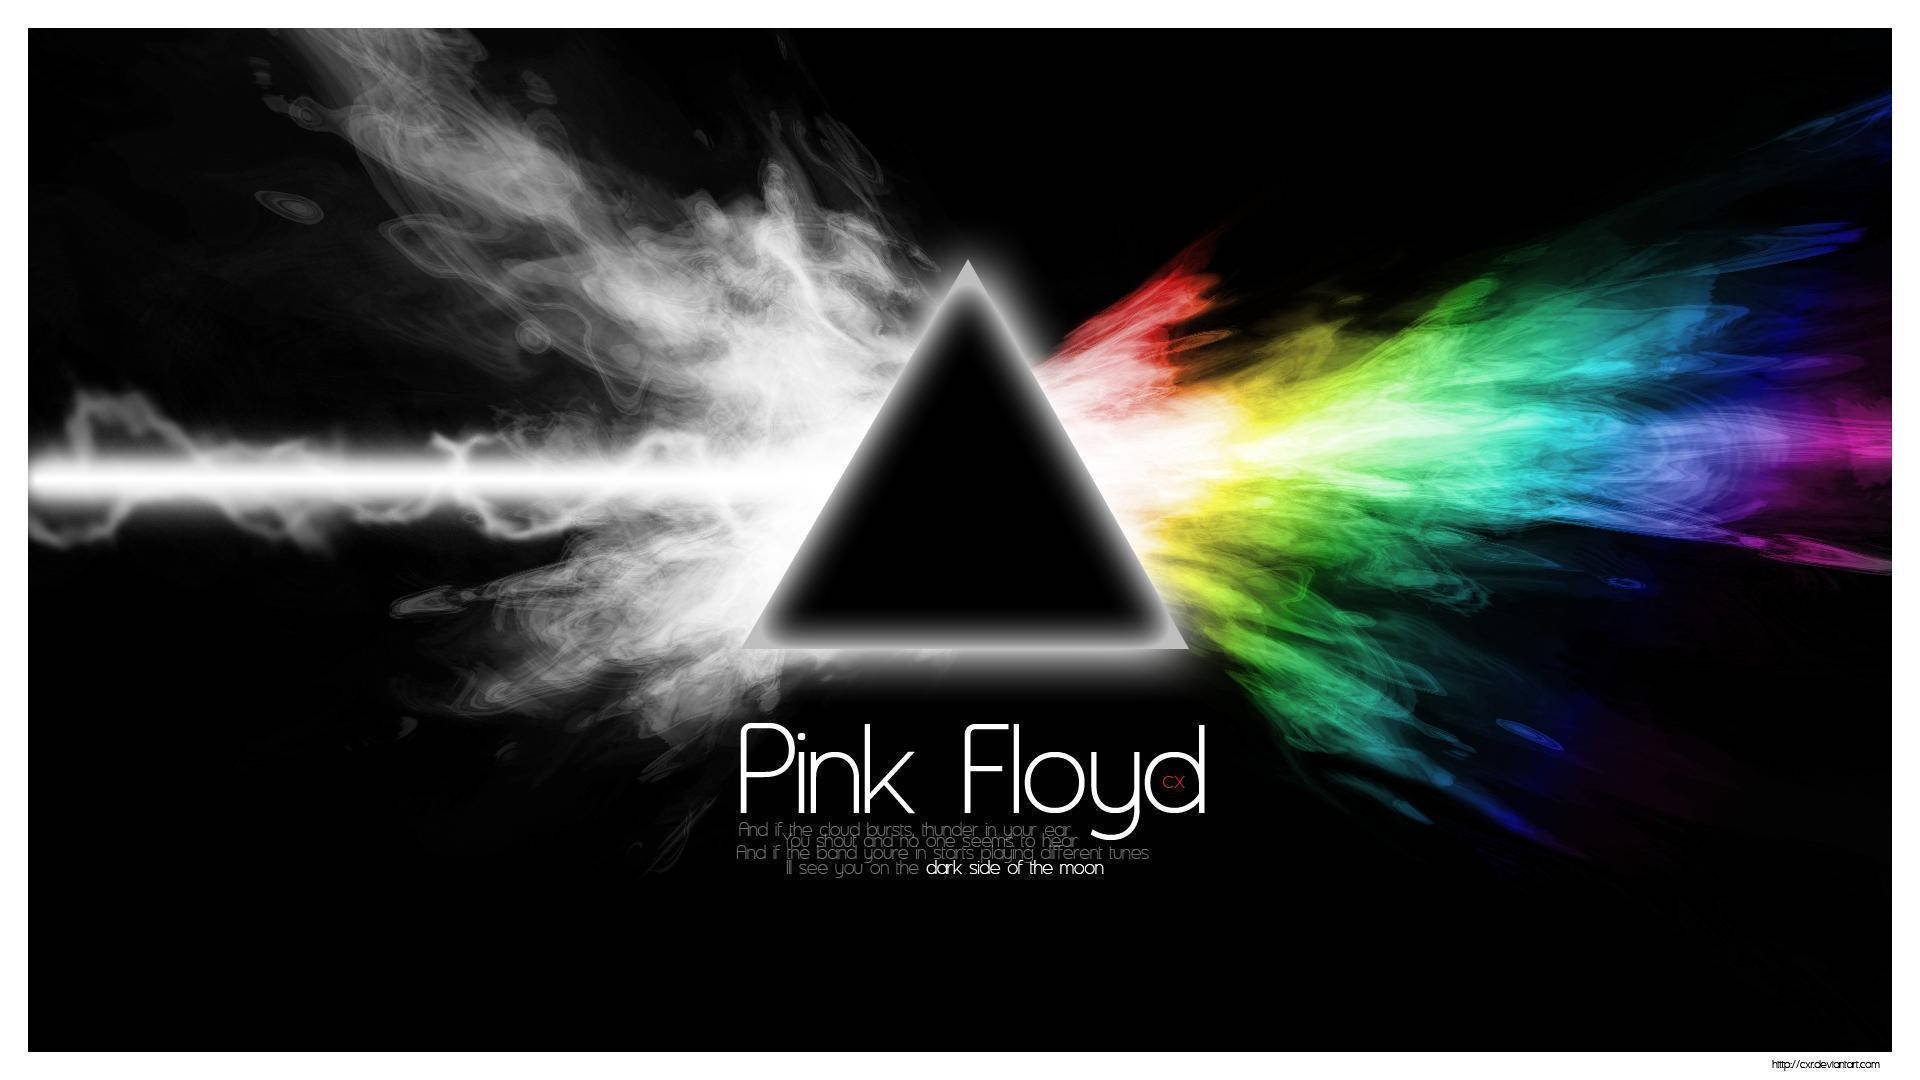 Pink Floyd Digital Album Cover Background